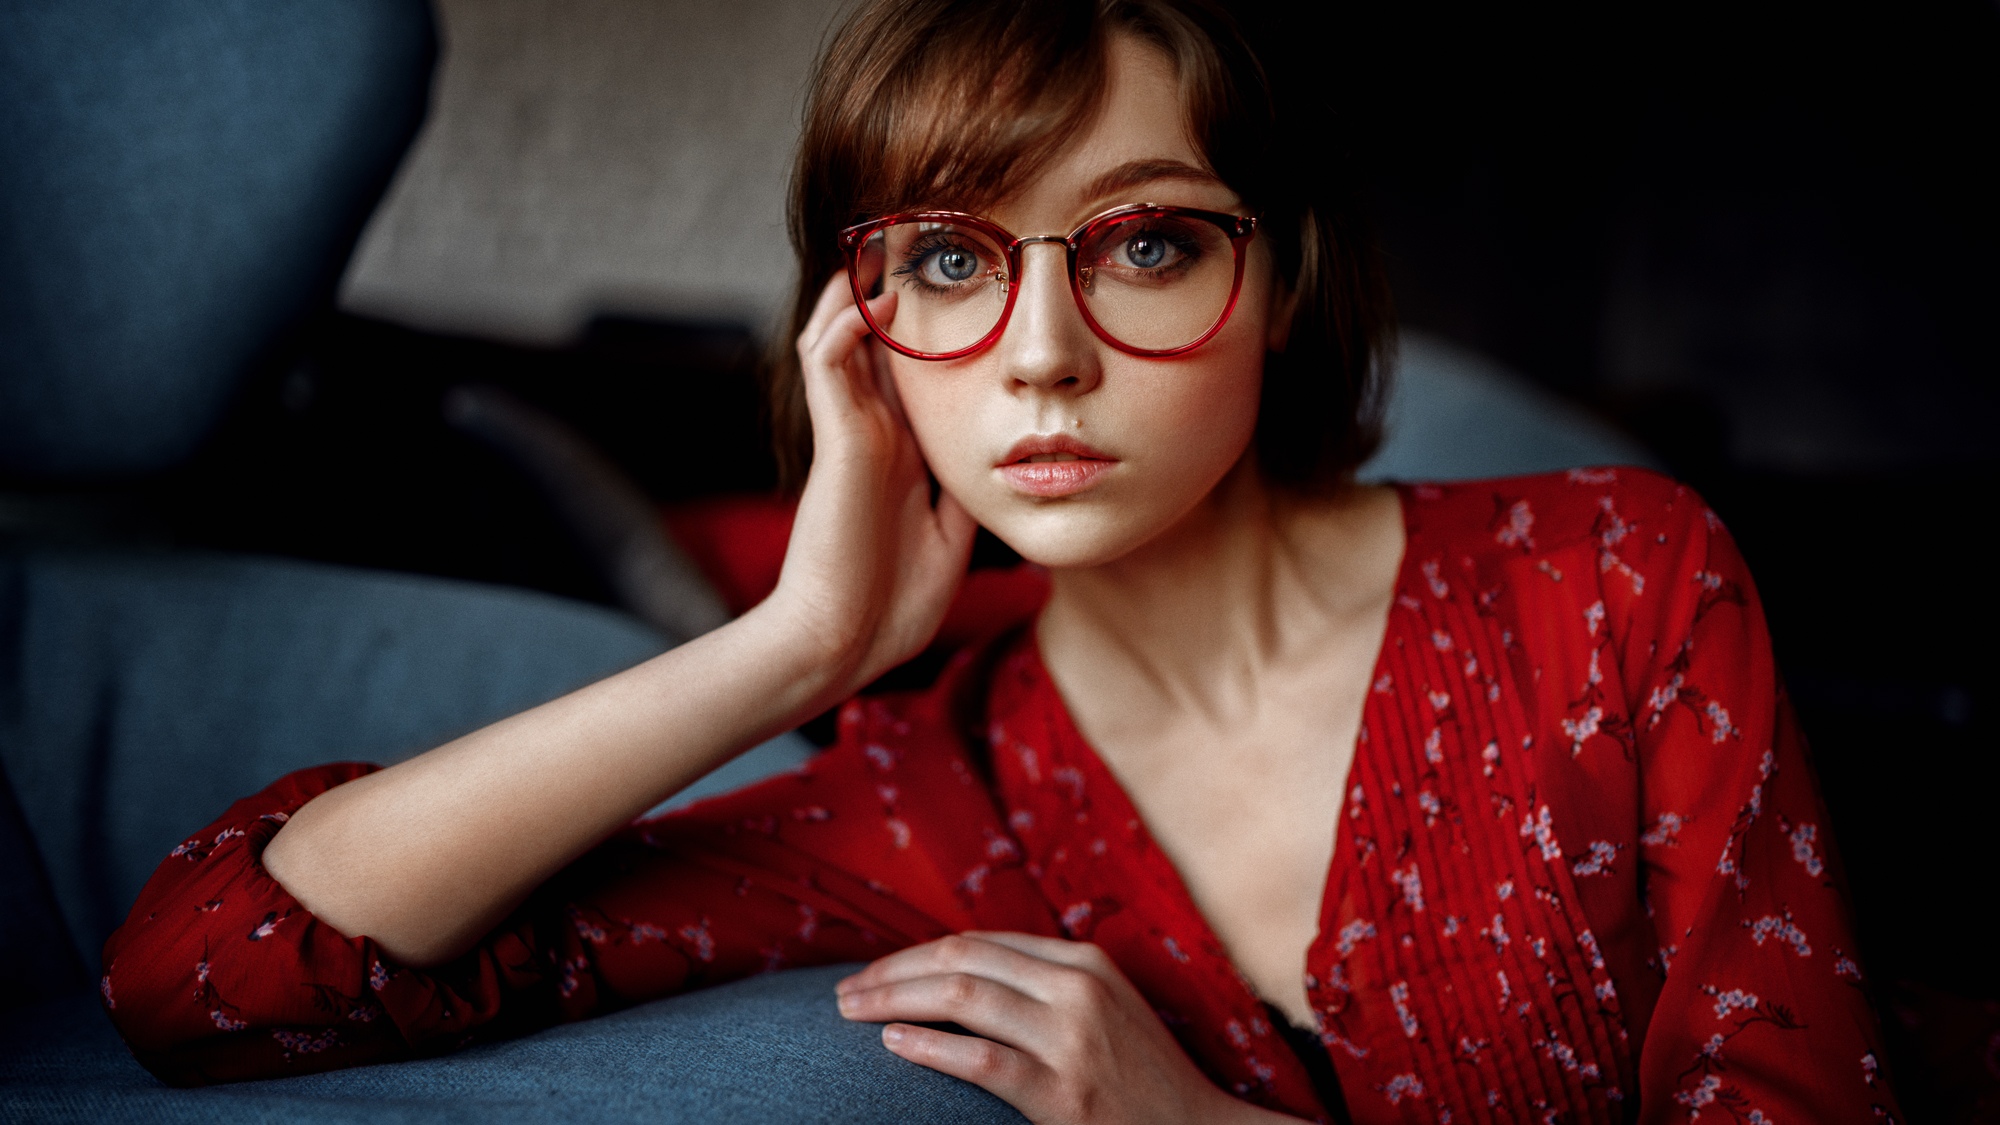 Olya Pushkina Women Model Brunette Blue Eyes Women With Glasses Glasses Touching Face Looking At Vie 2000x1125